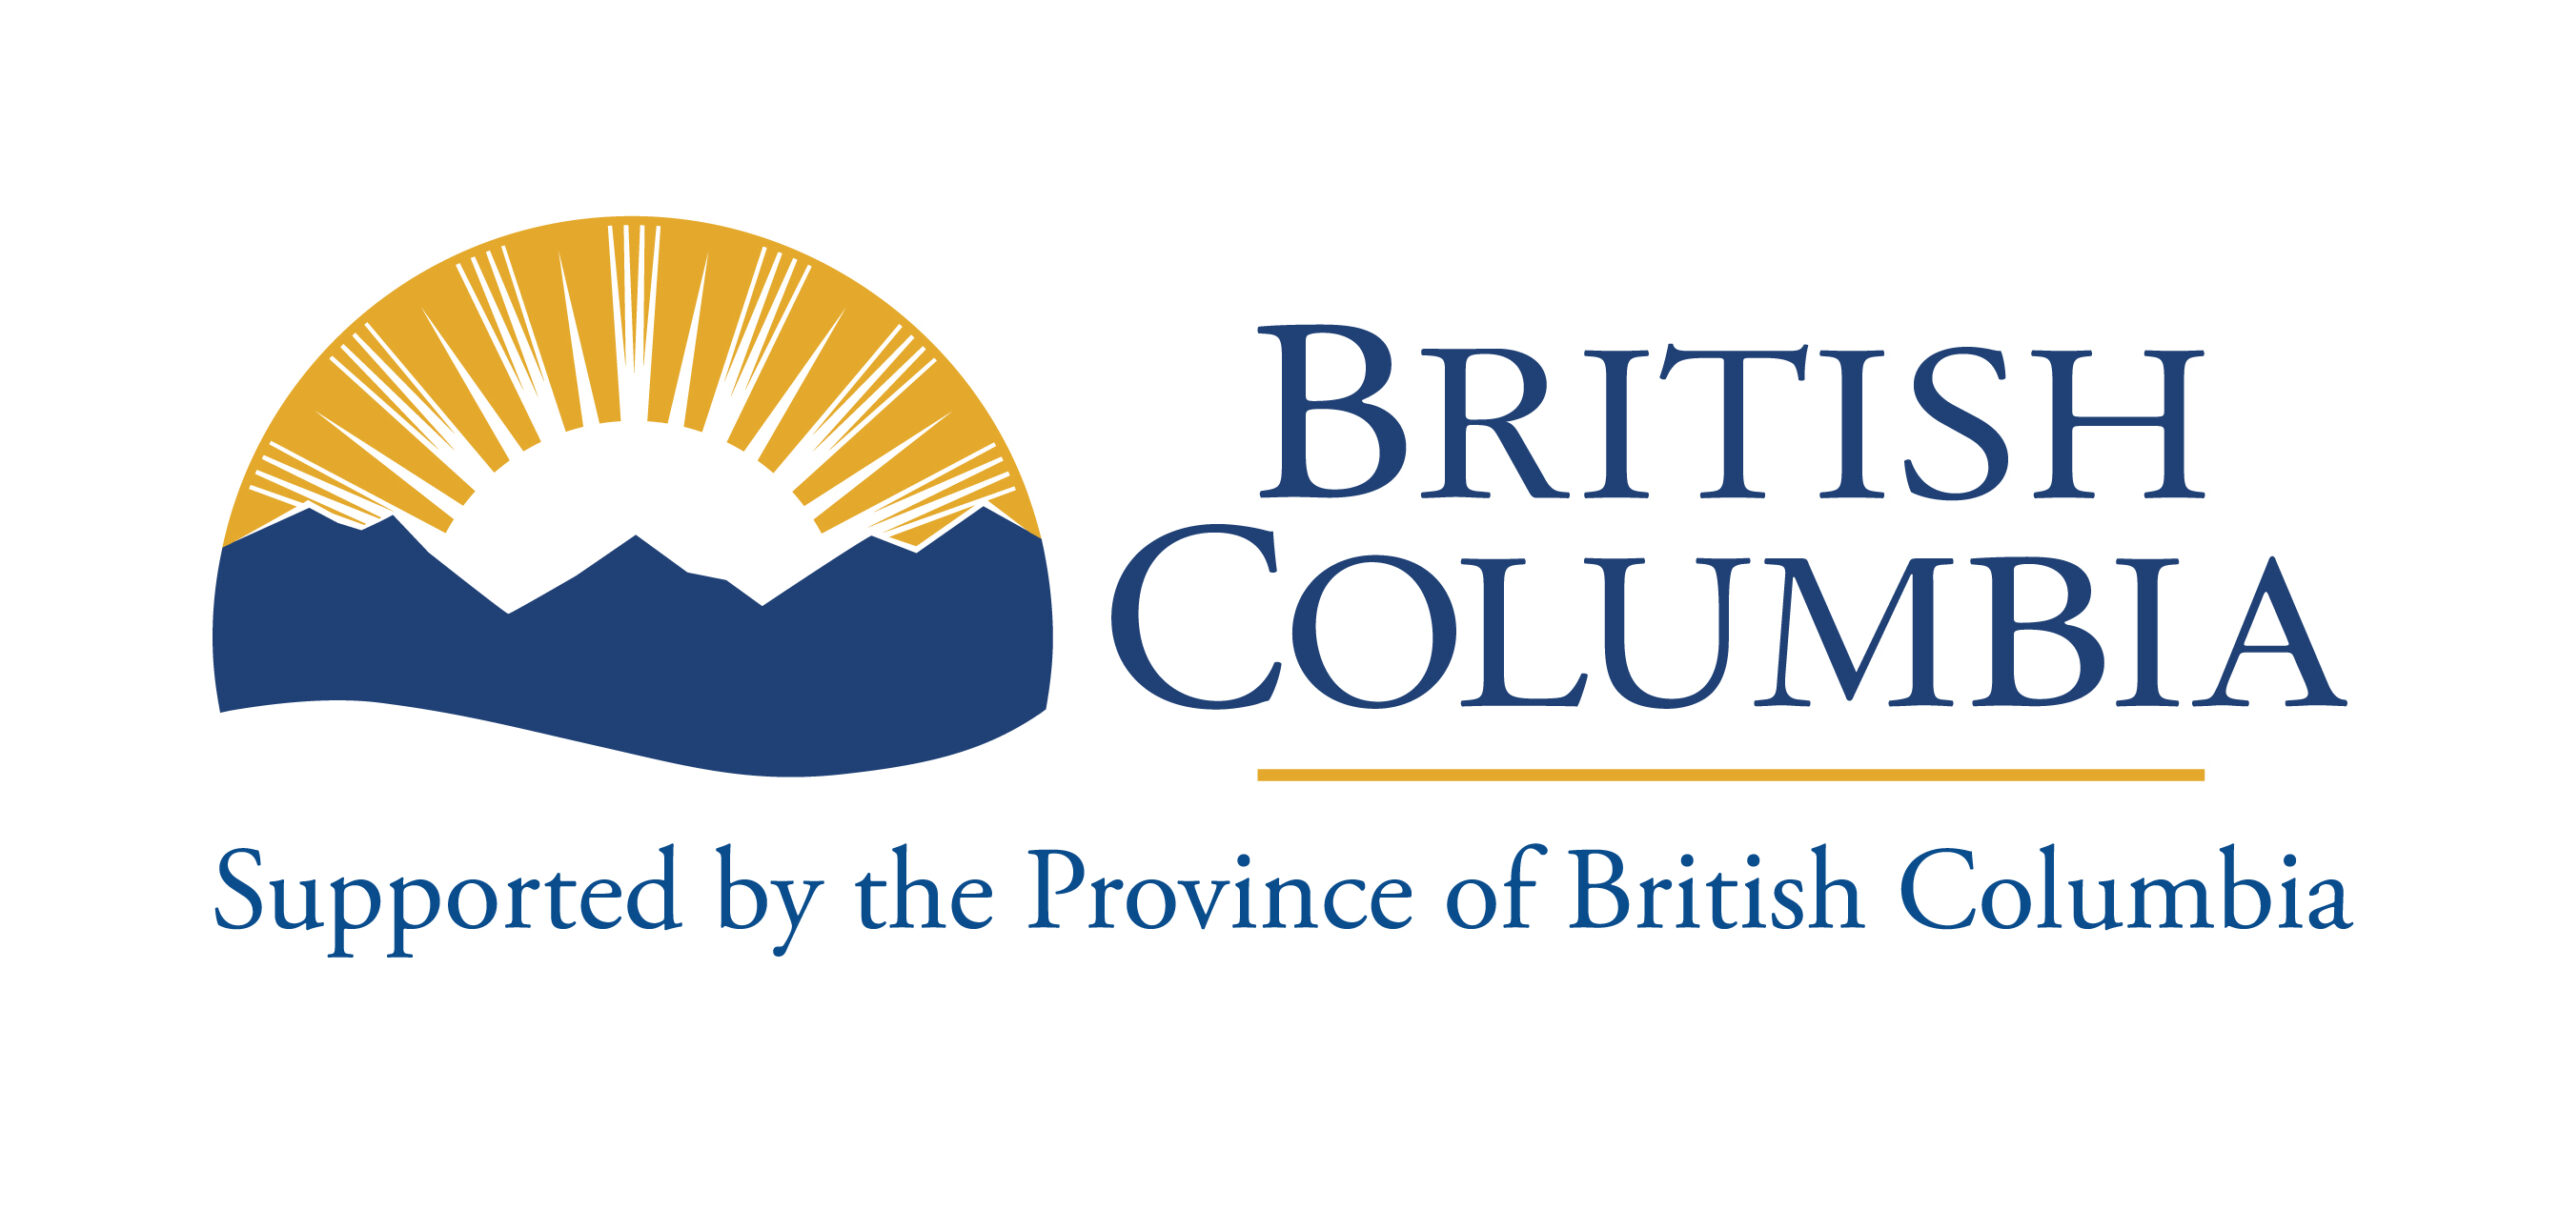 The Province of British Columbia logo